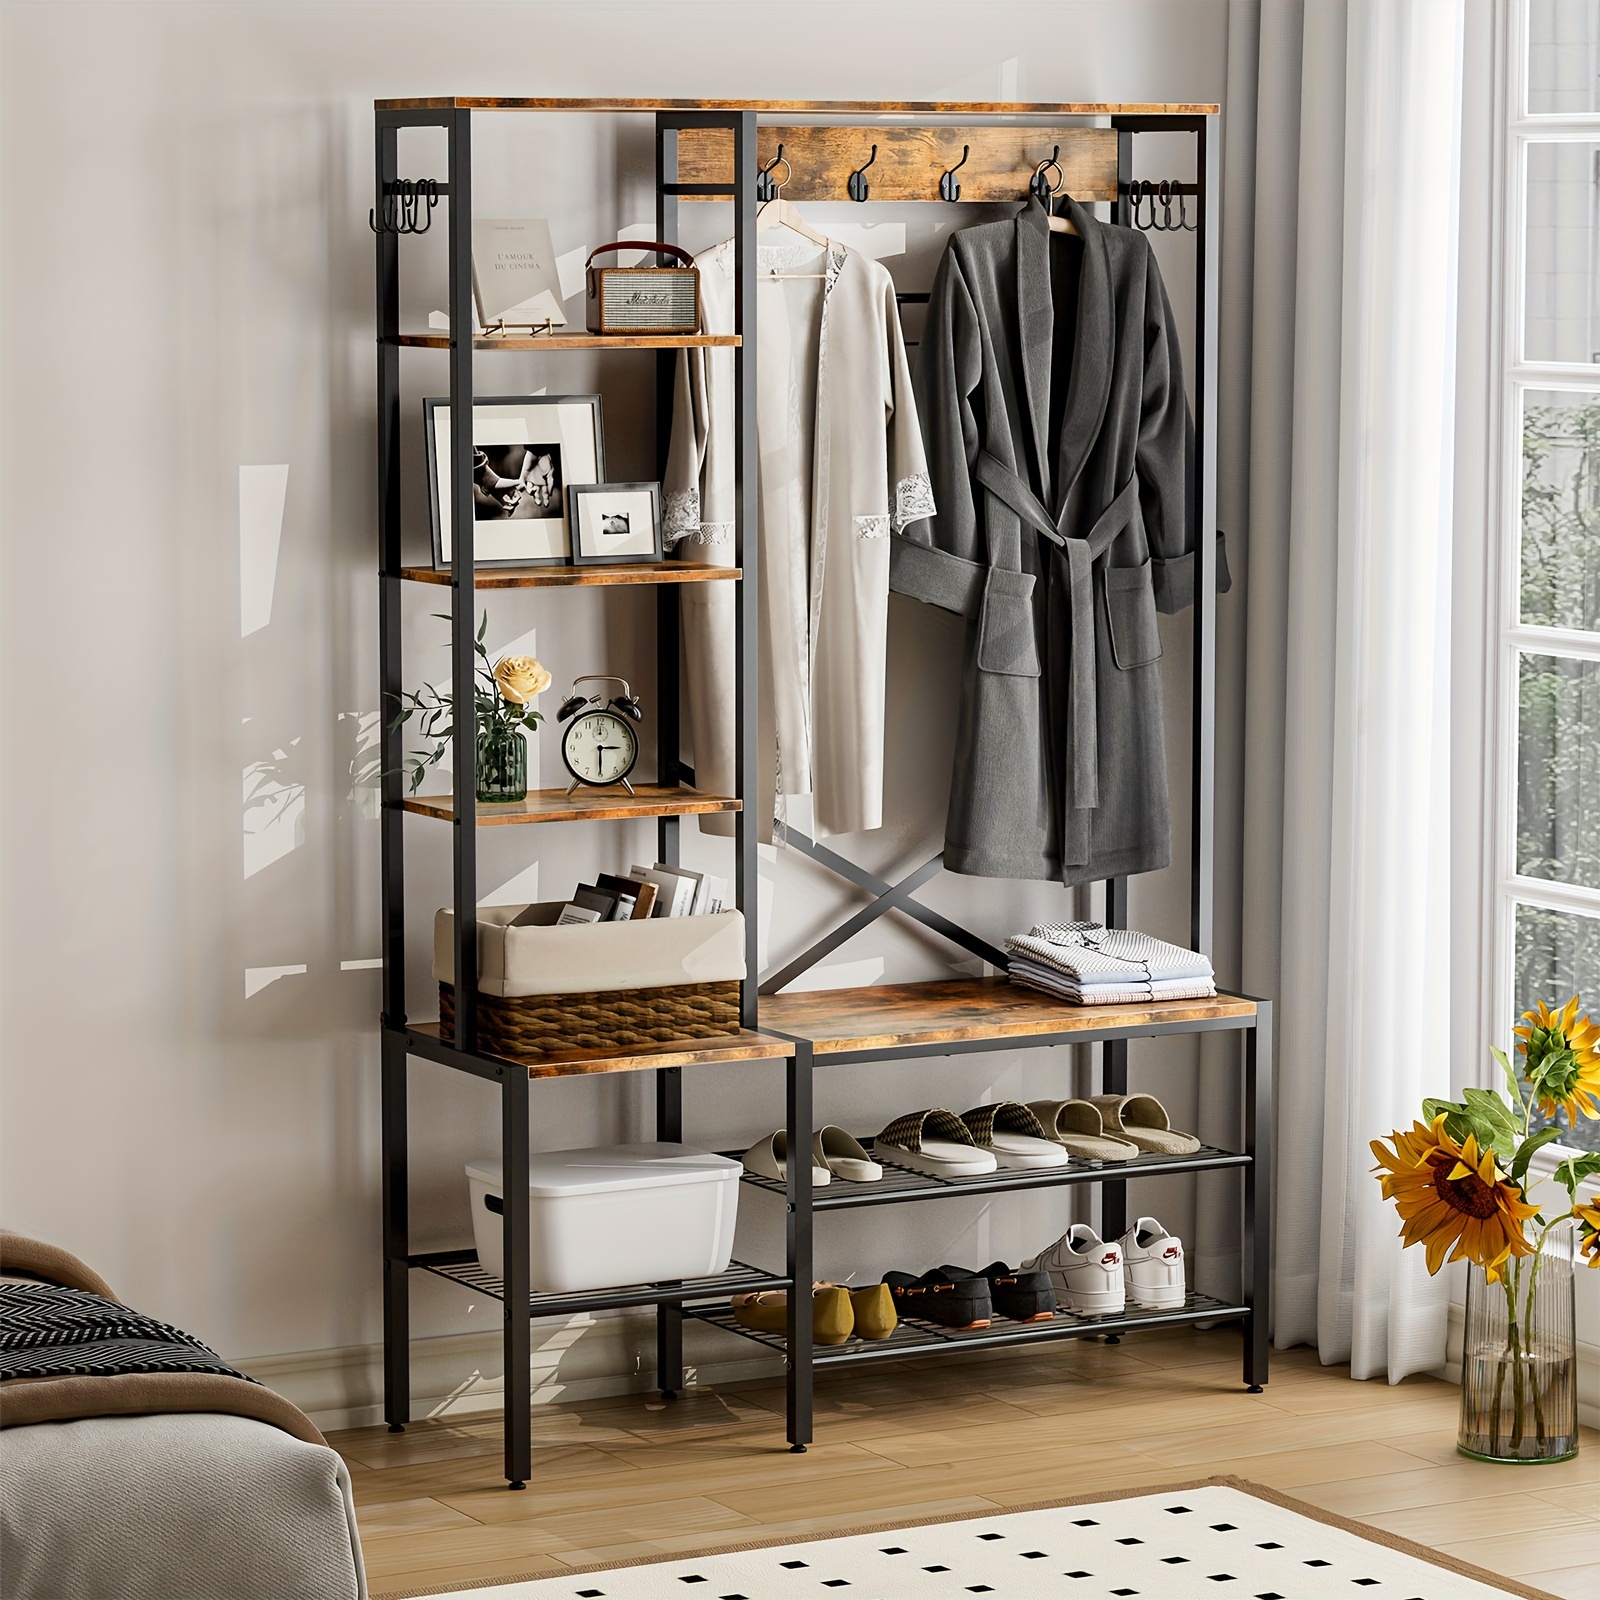 

Freestanding Coat Rack, Hang Clothes, Coats, With Bench And Shoe Storage, Suitable For Bedroom, Living Room, Corridor